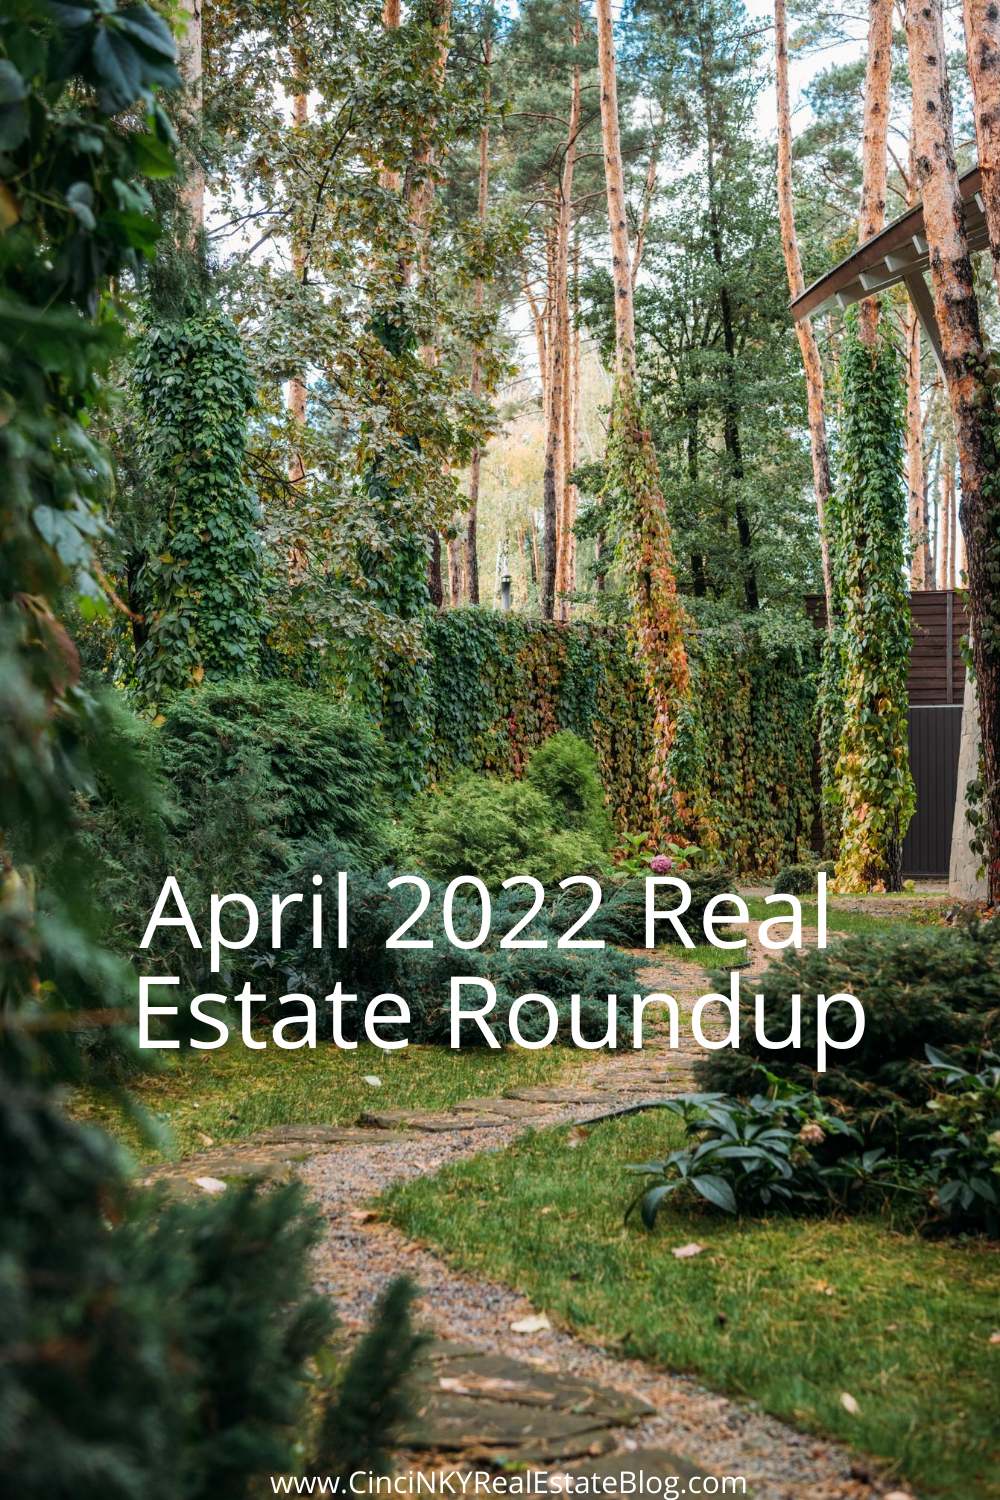 ￼April 2022 Real Estate Roundup